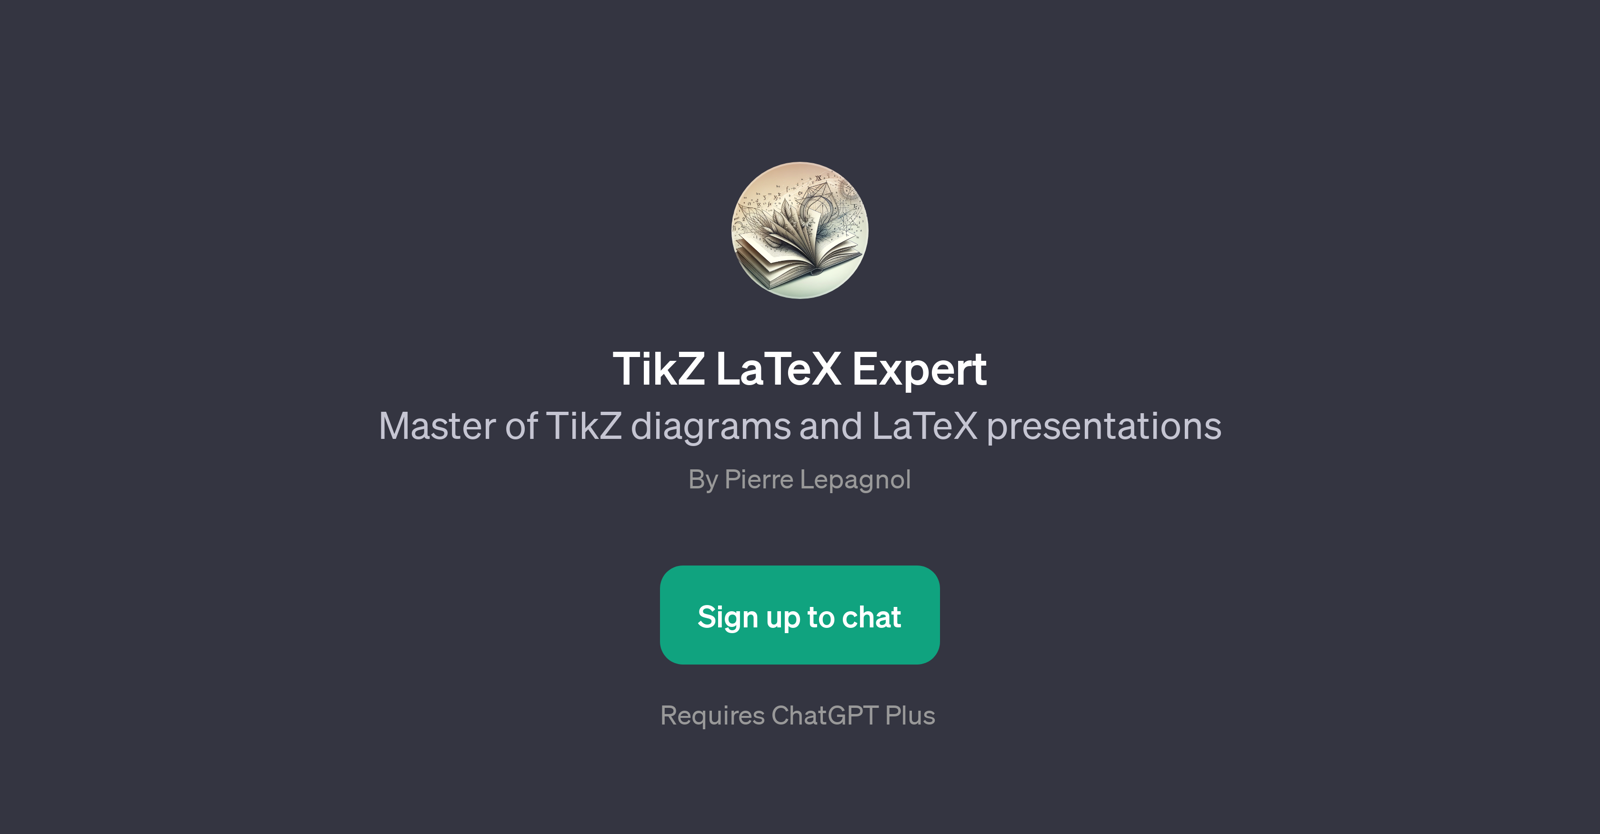 TikZ LaTeX Expert website